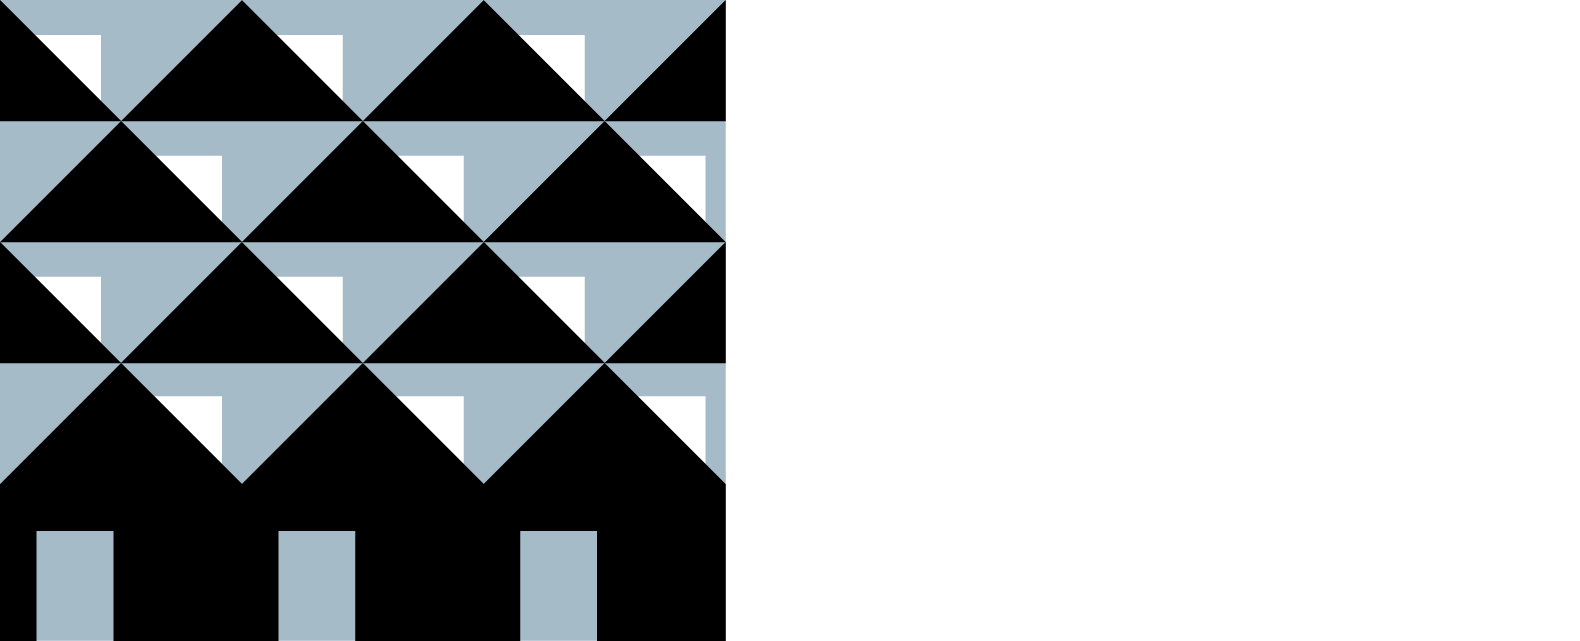 prh-logo-darkbgd-rgb.png